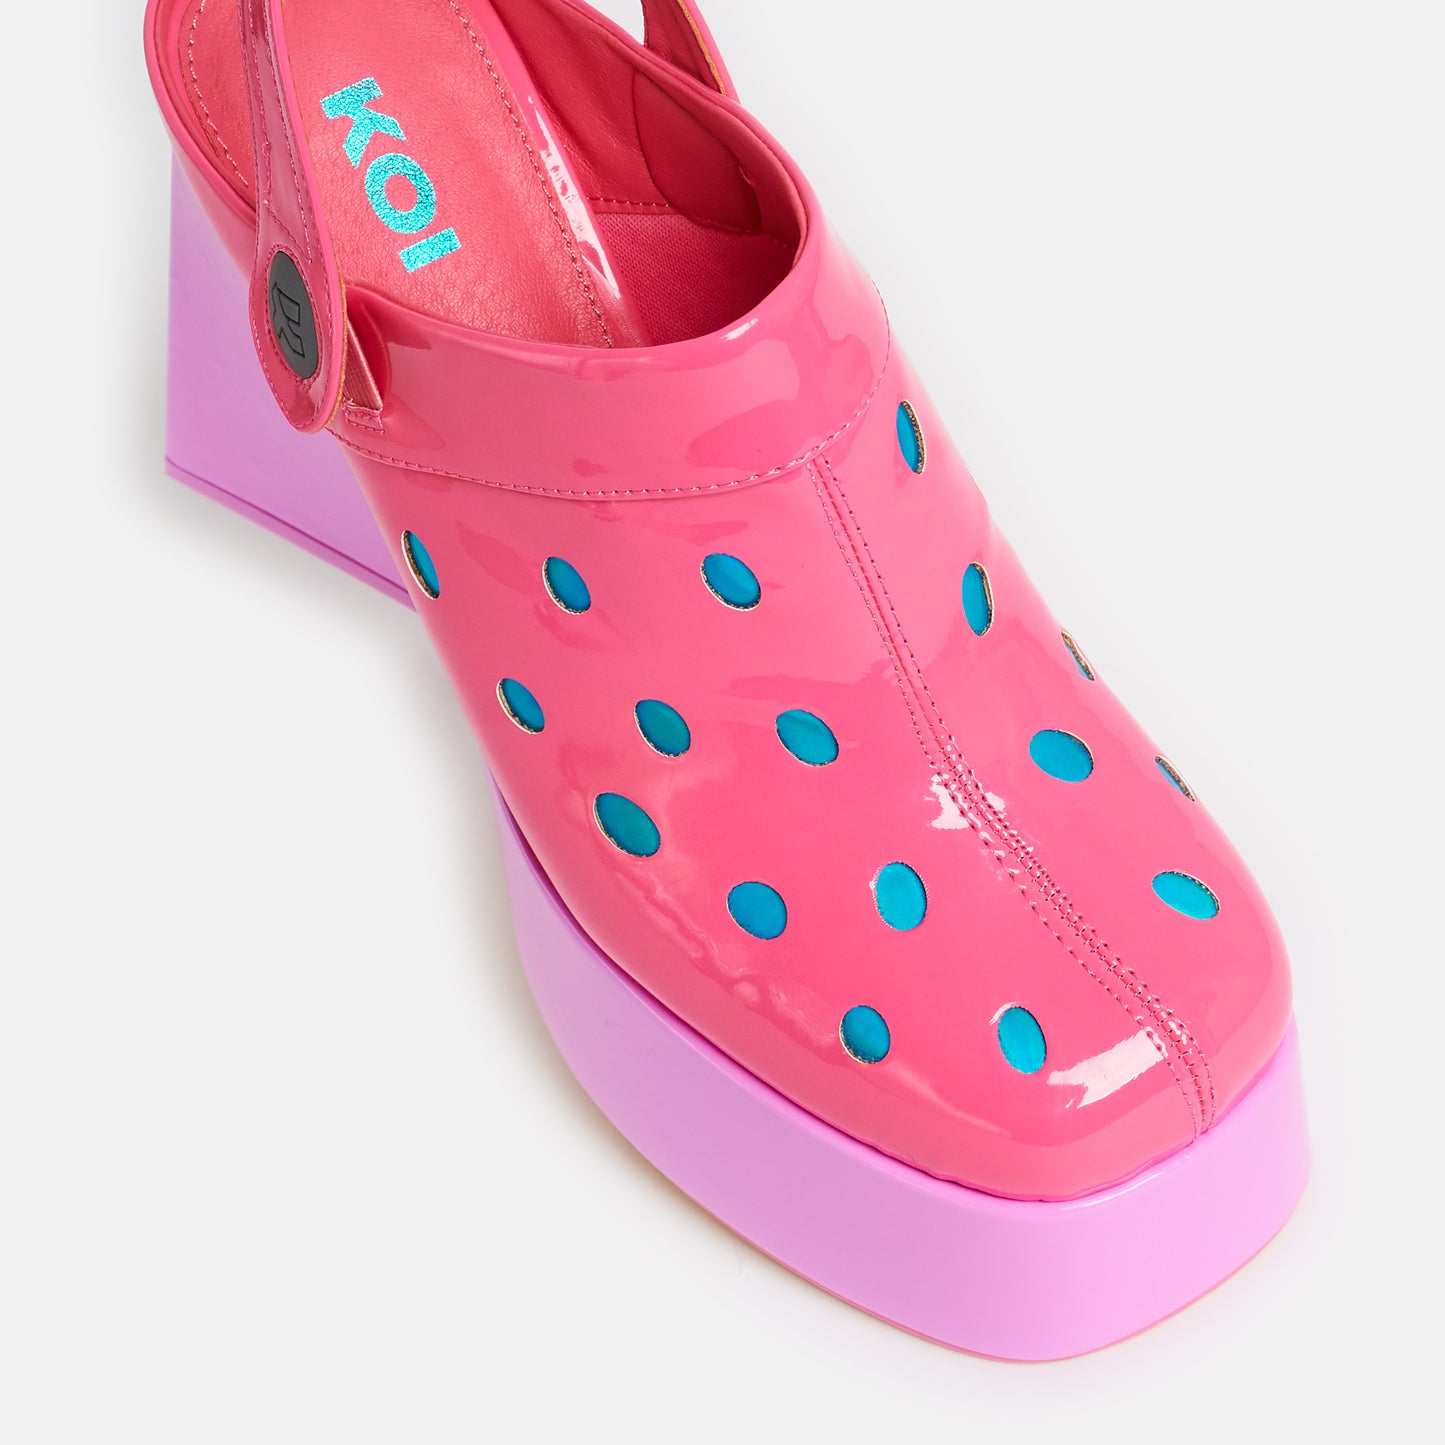 Candyfloss Powder Alien Heels - Shoes - KOI Footwear - Pink - Top View